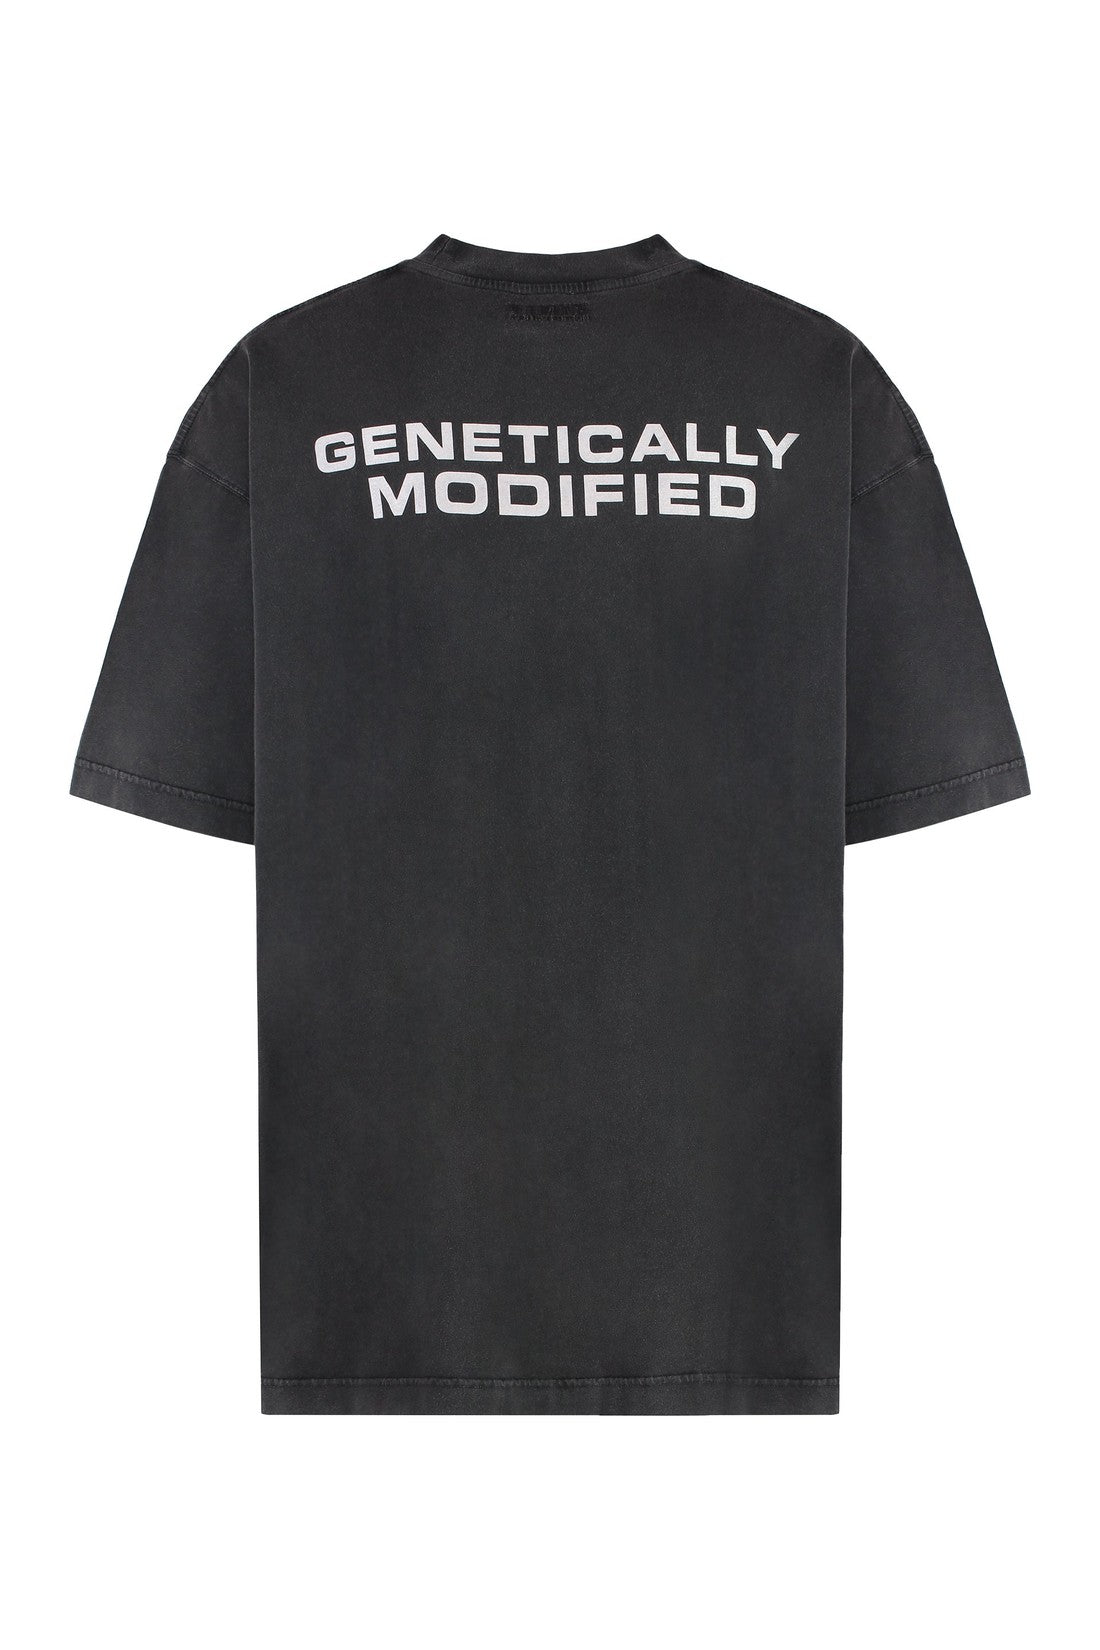 Genetically Modified cotton T-shirt